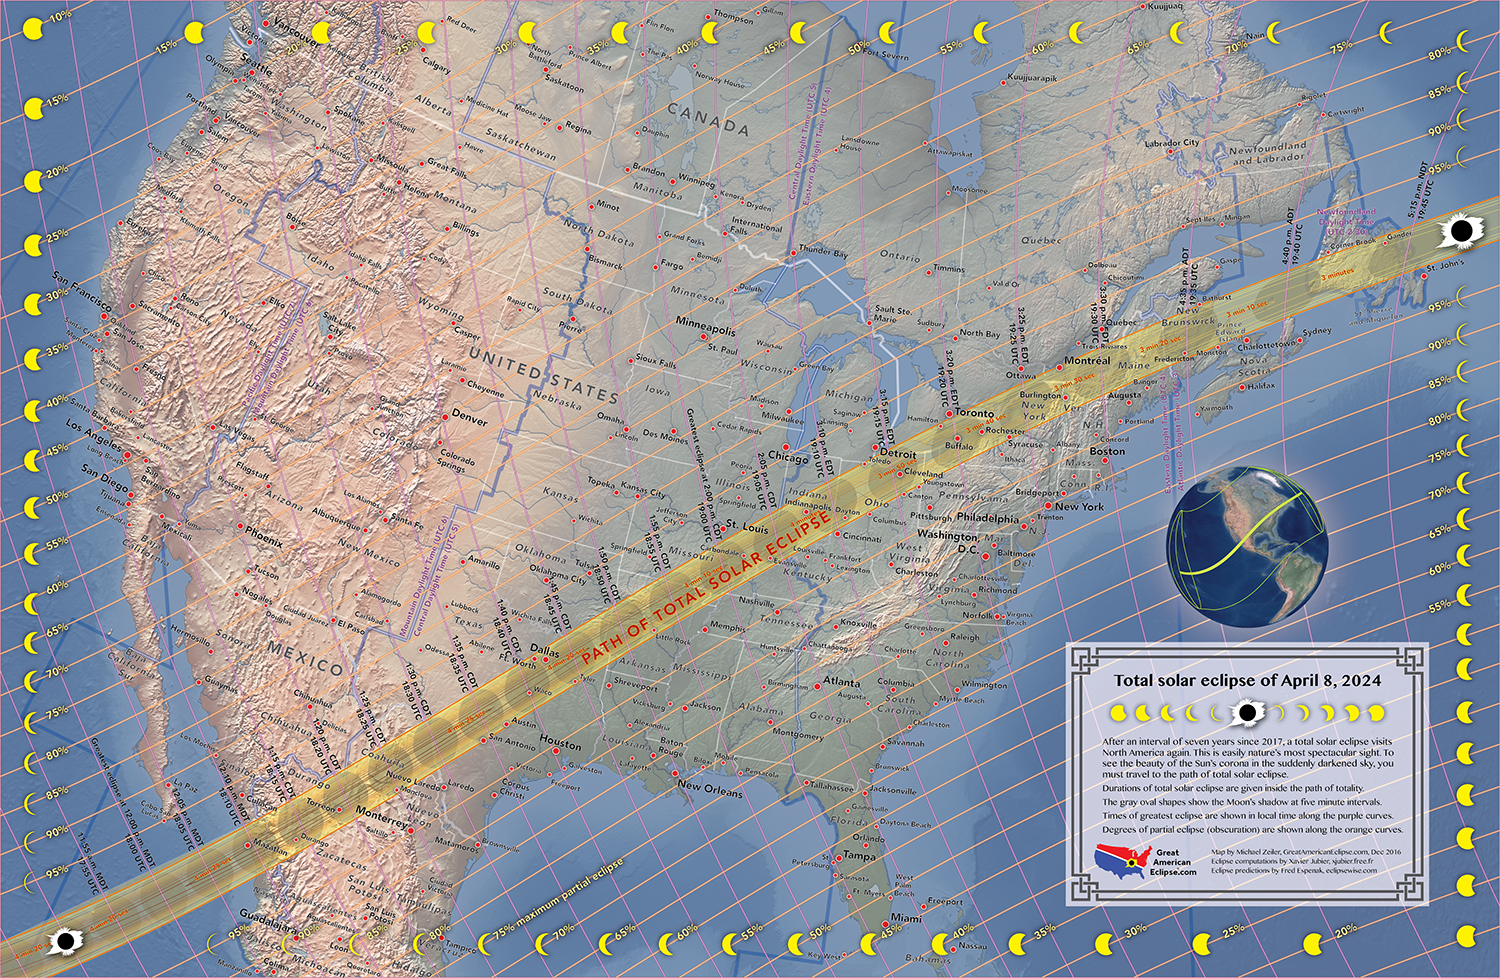 April 8 2024 Total Solar Eclipse Map 2024 Apr 8 — Total solar eclipse of April 8, 2024